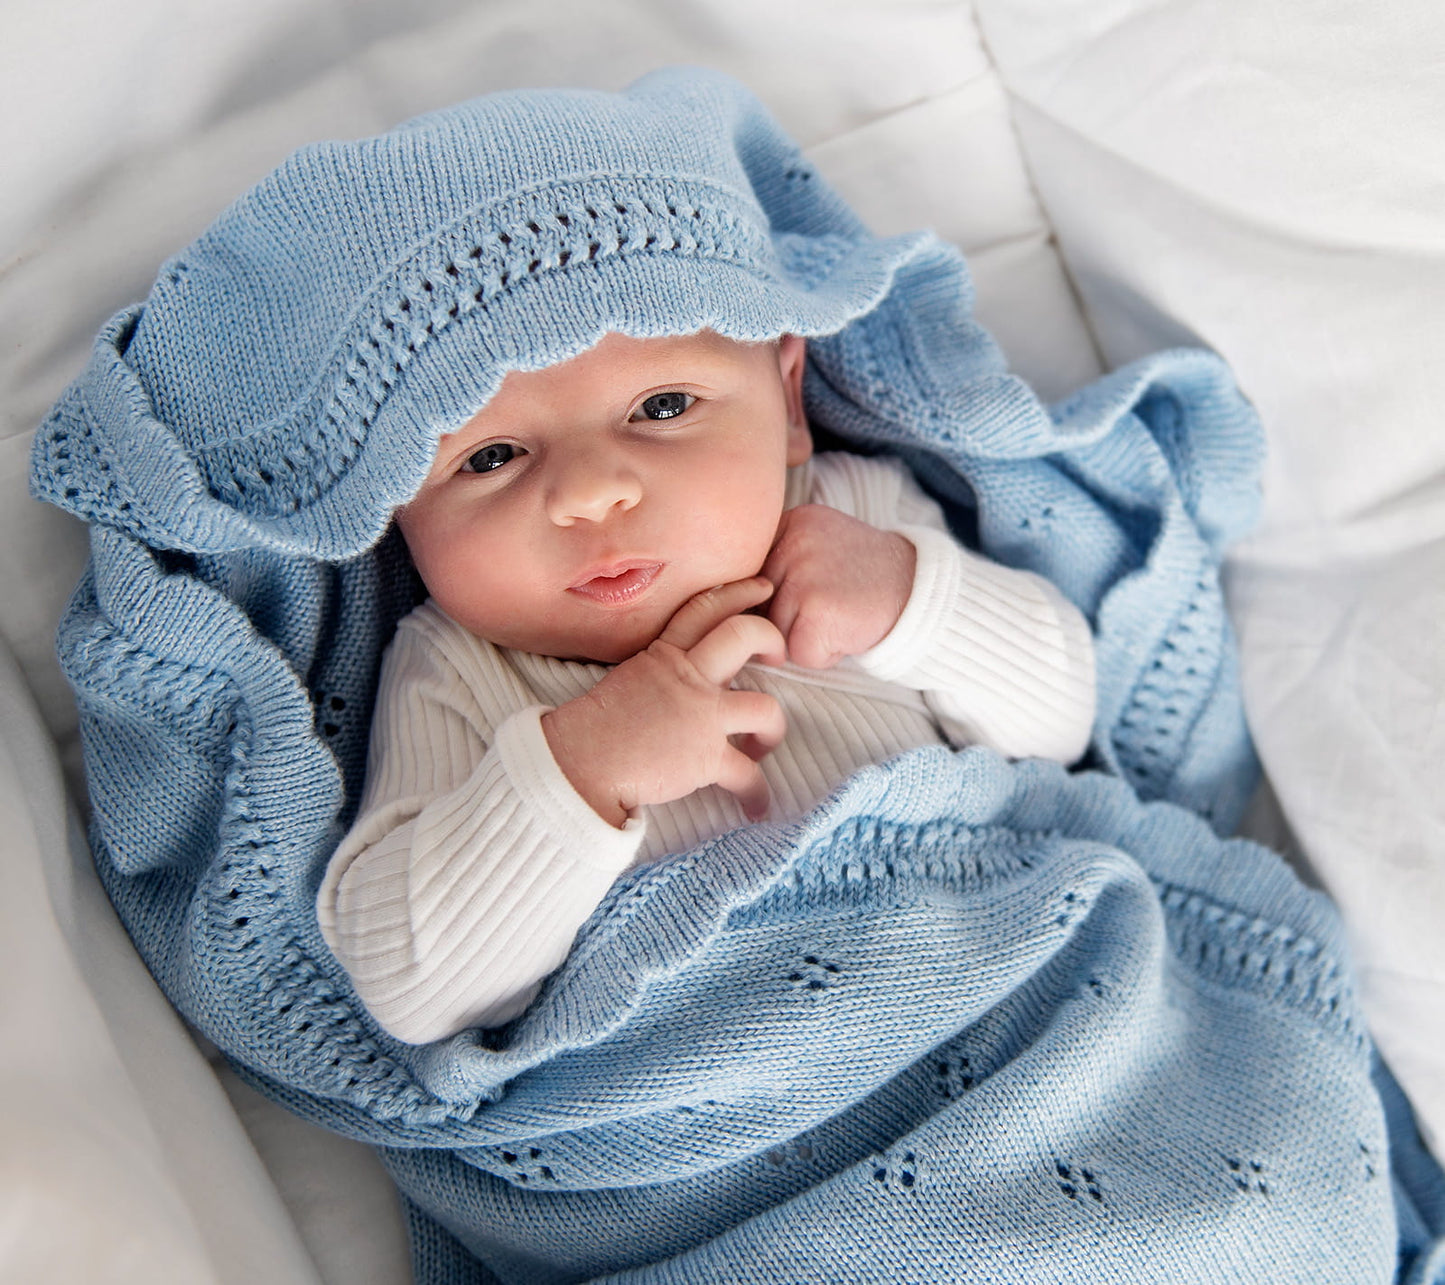 Soft cellular bamboo baby blanket - Blue - Daisy